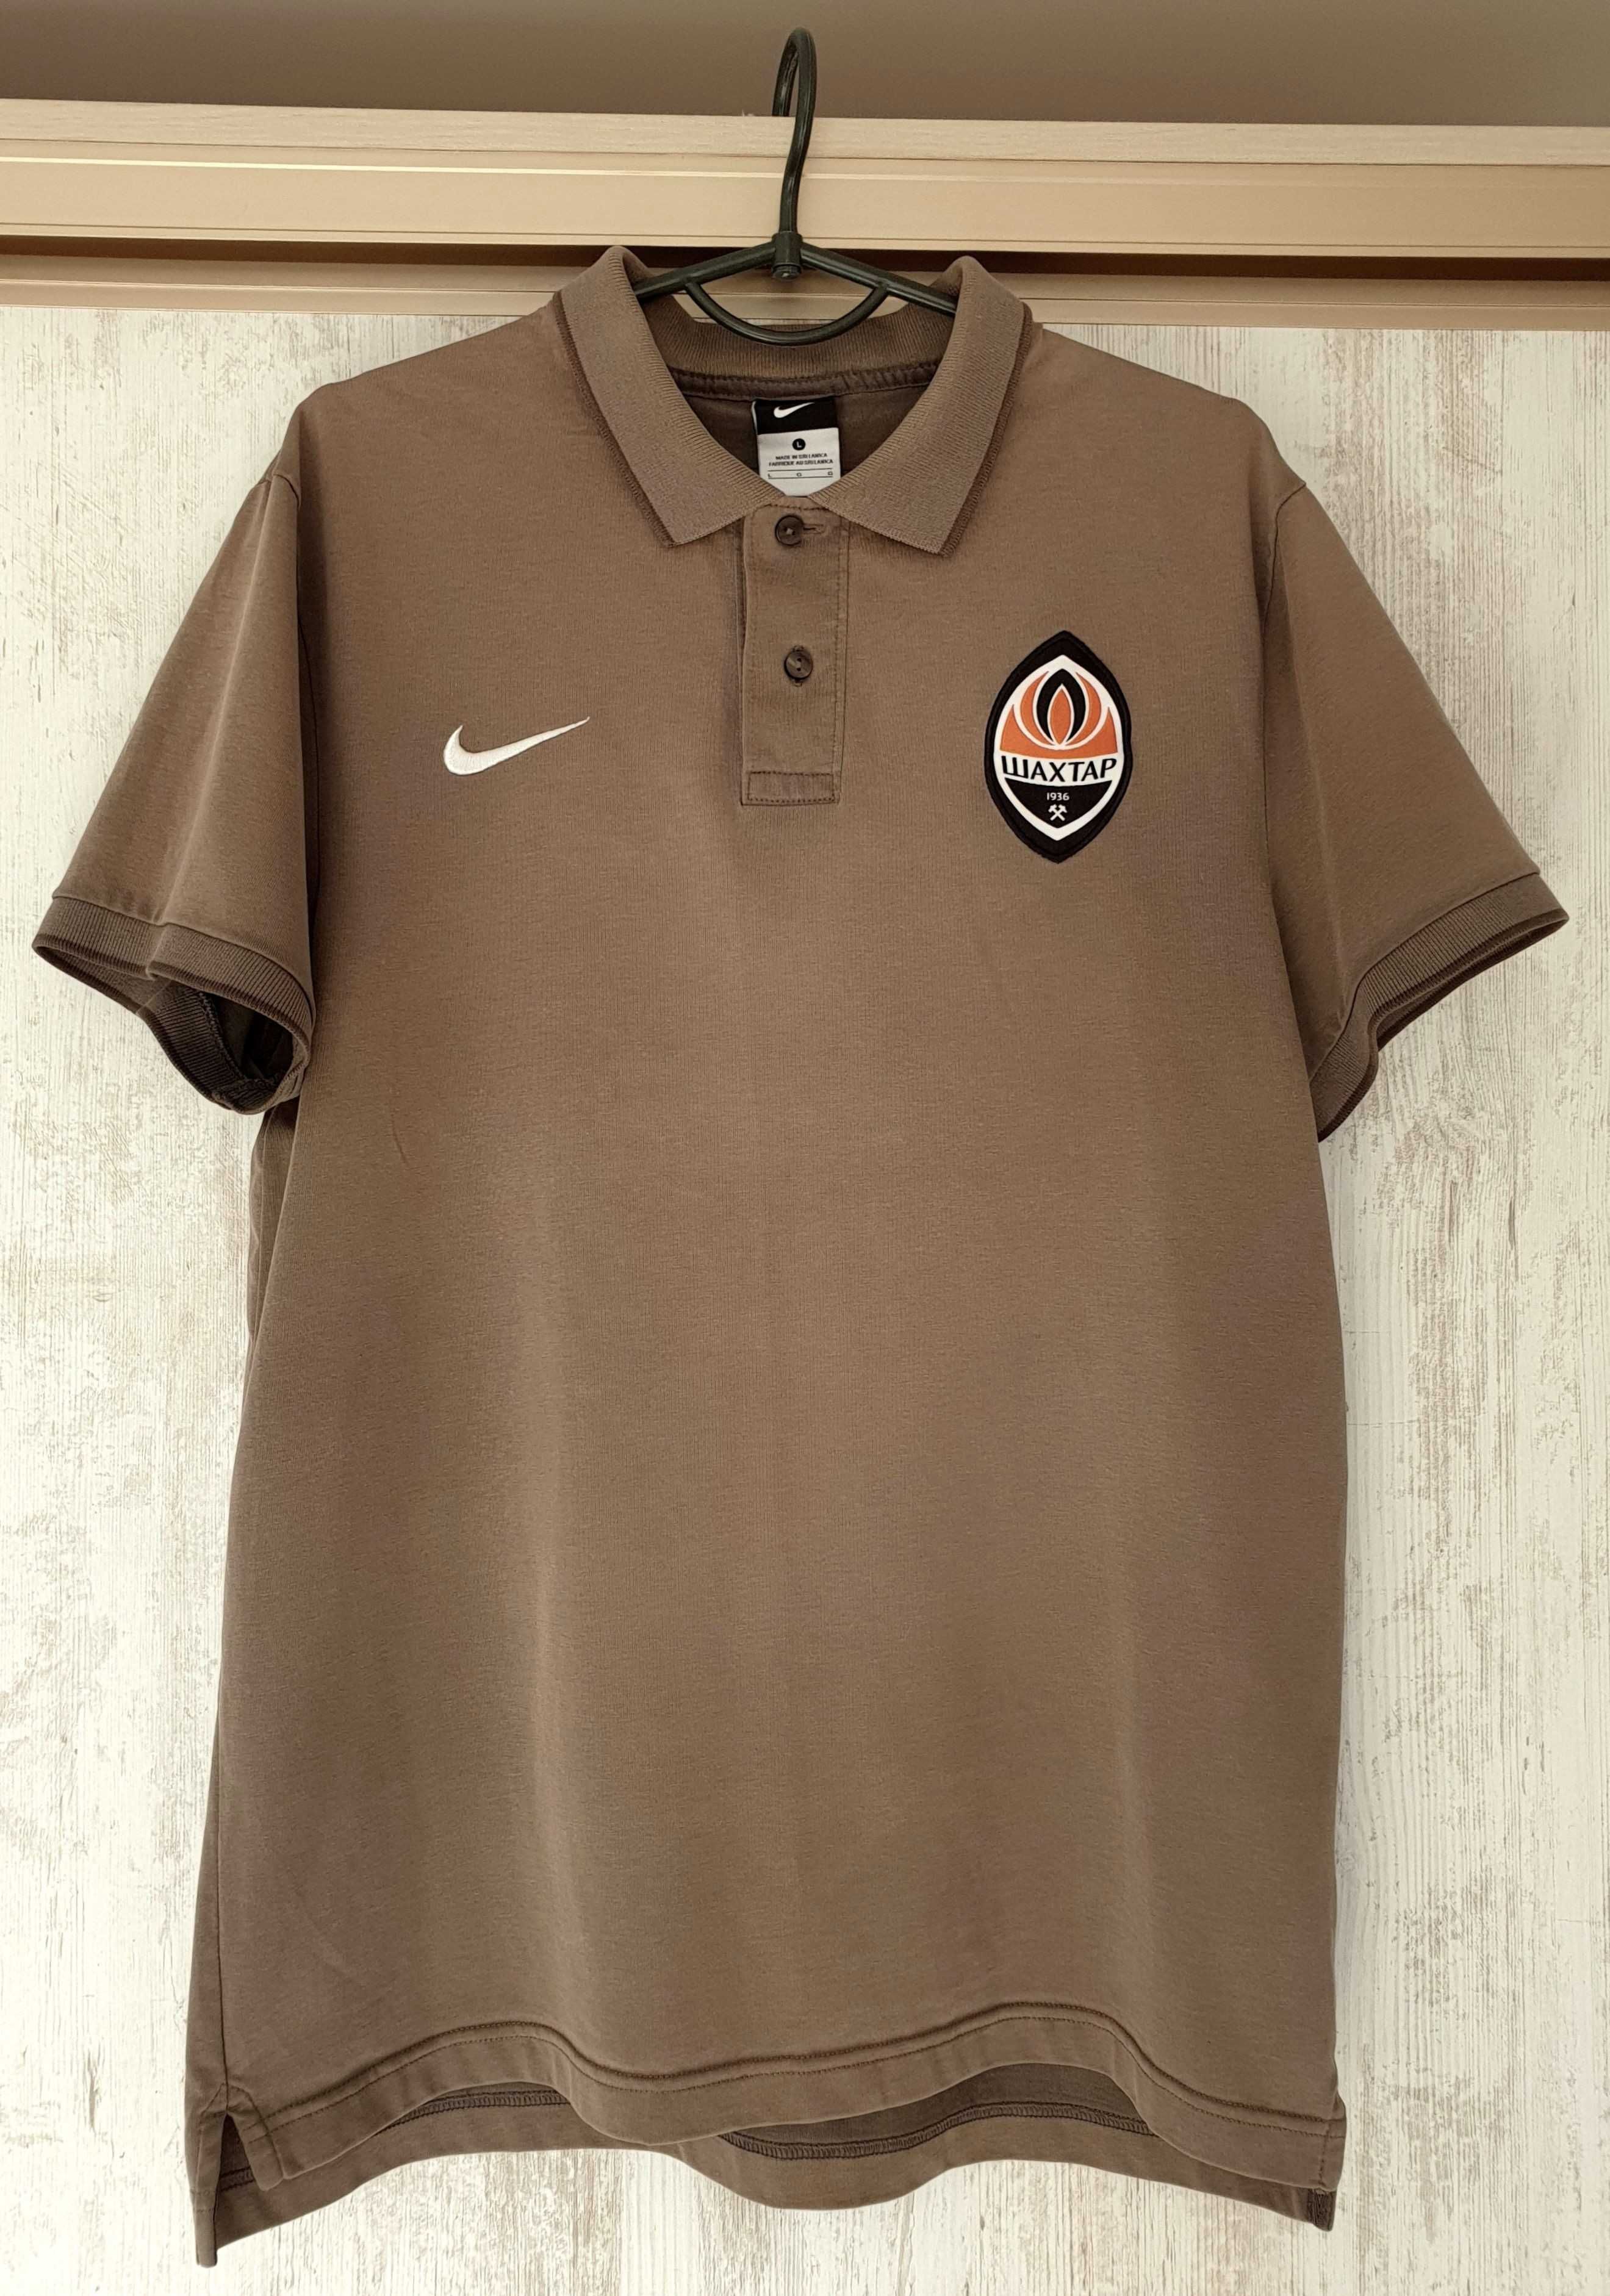 Шахтар Nike футболка поло сезон 10-11, коричнева,р-р L (Шахтер Донецк)